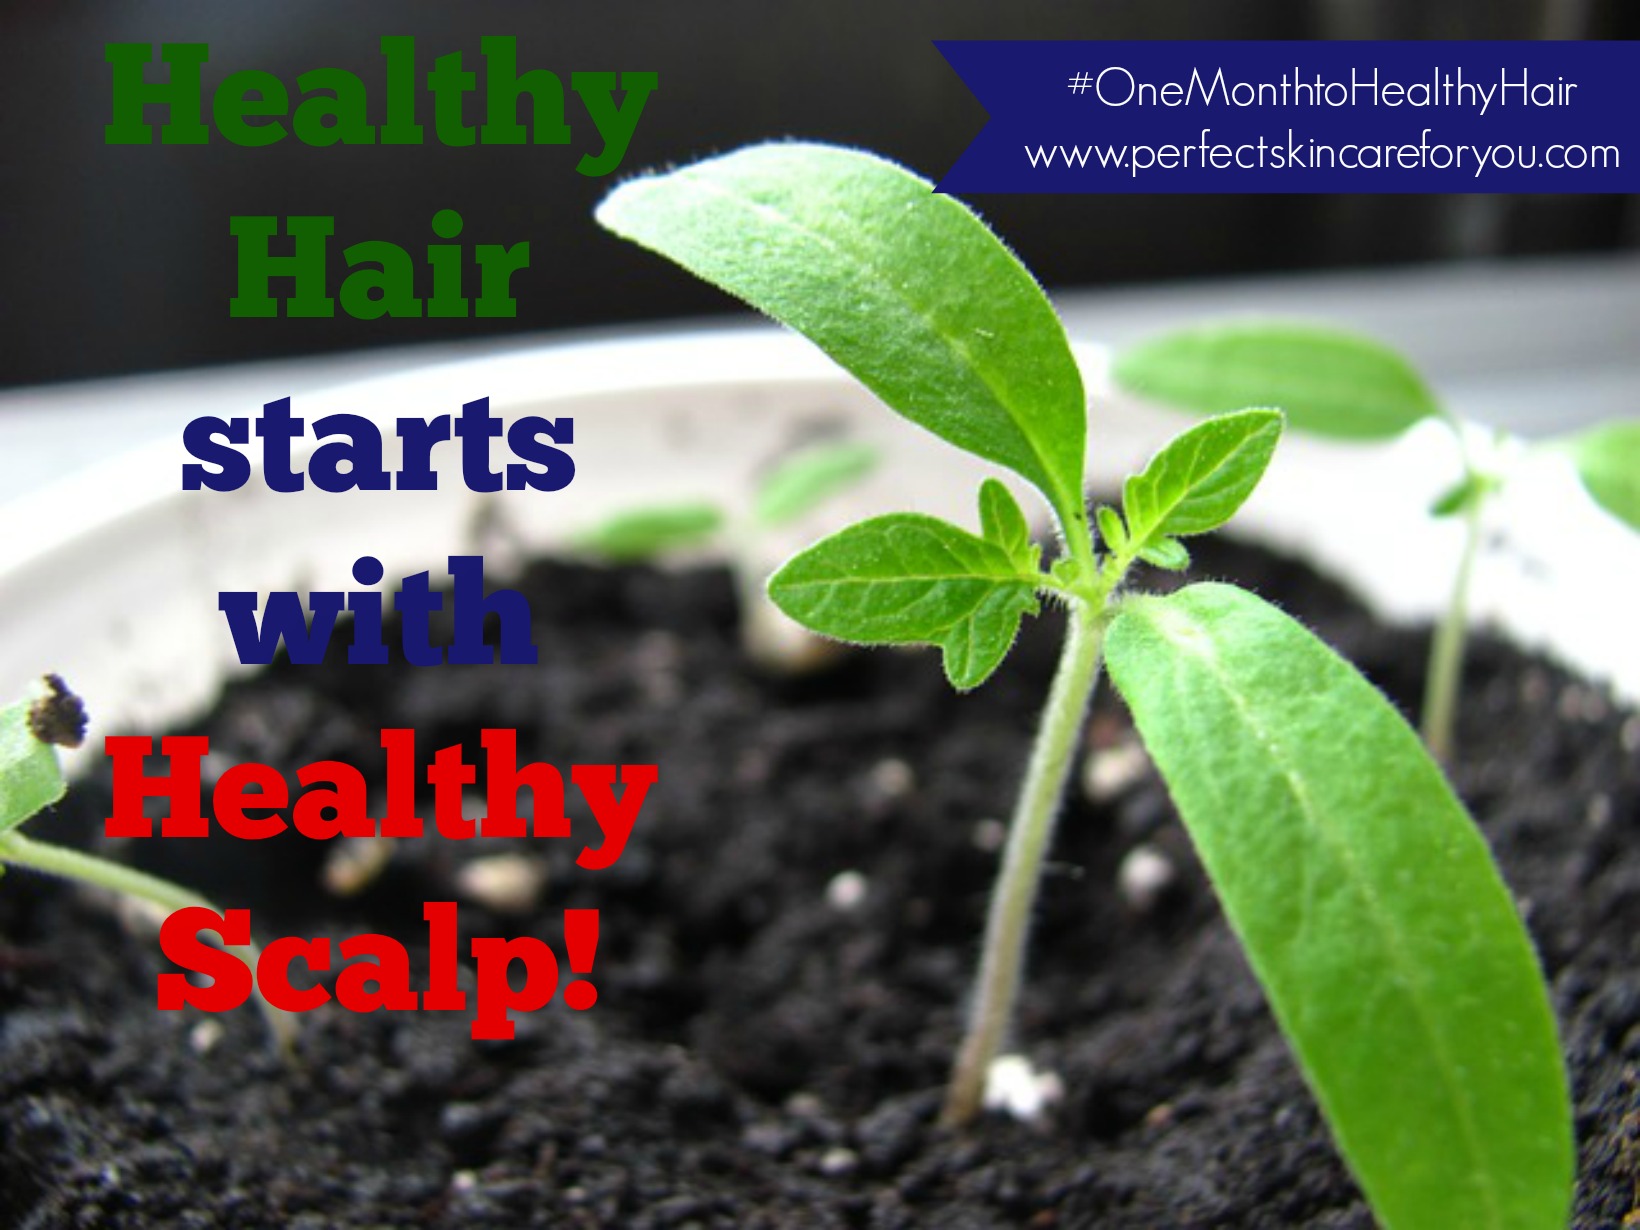 healthy scalp promotes healthy hair growth